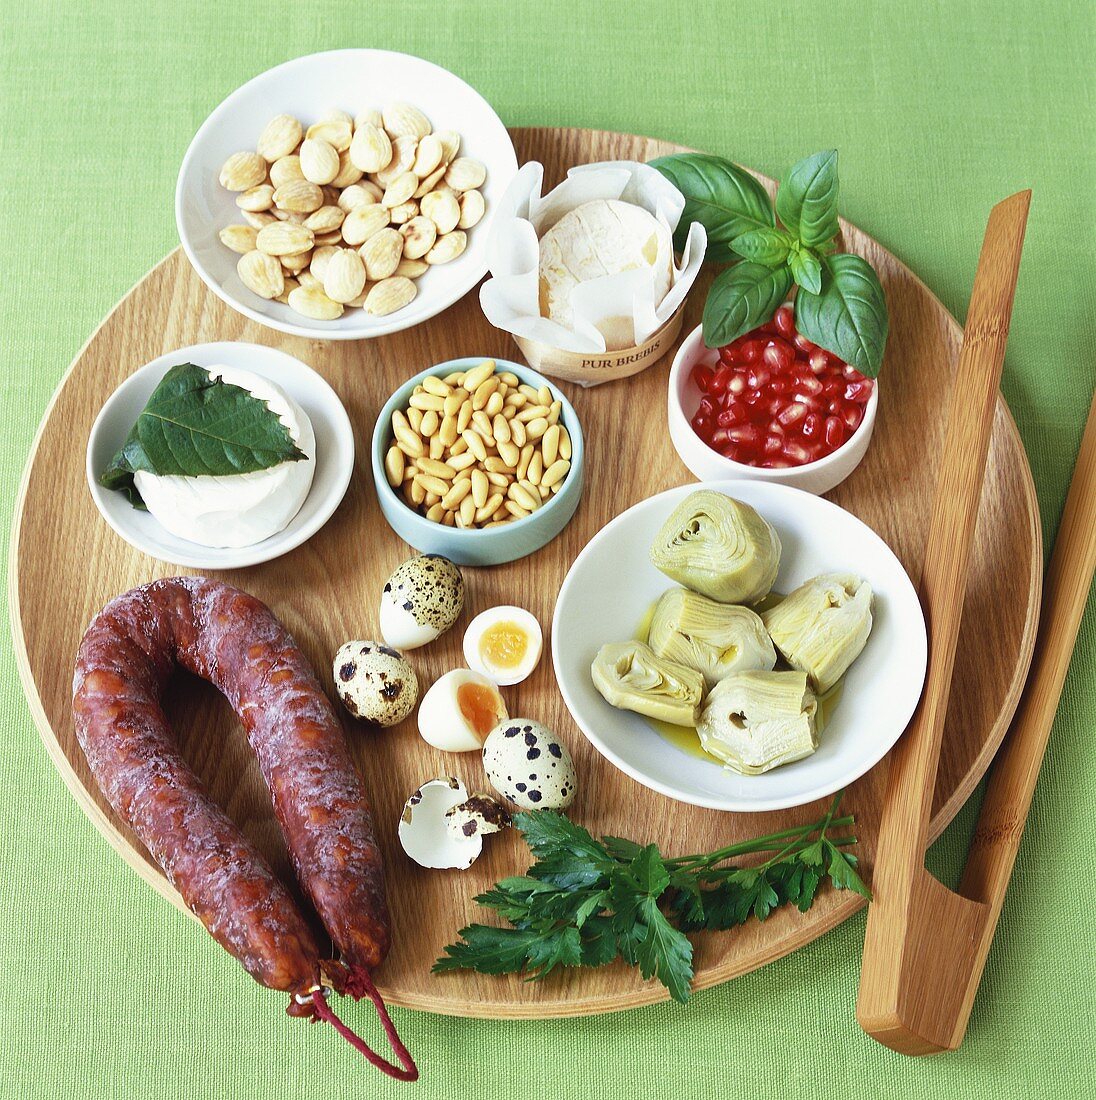 Assorted salad ingredients on wooden platter